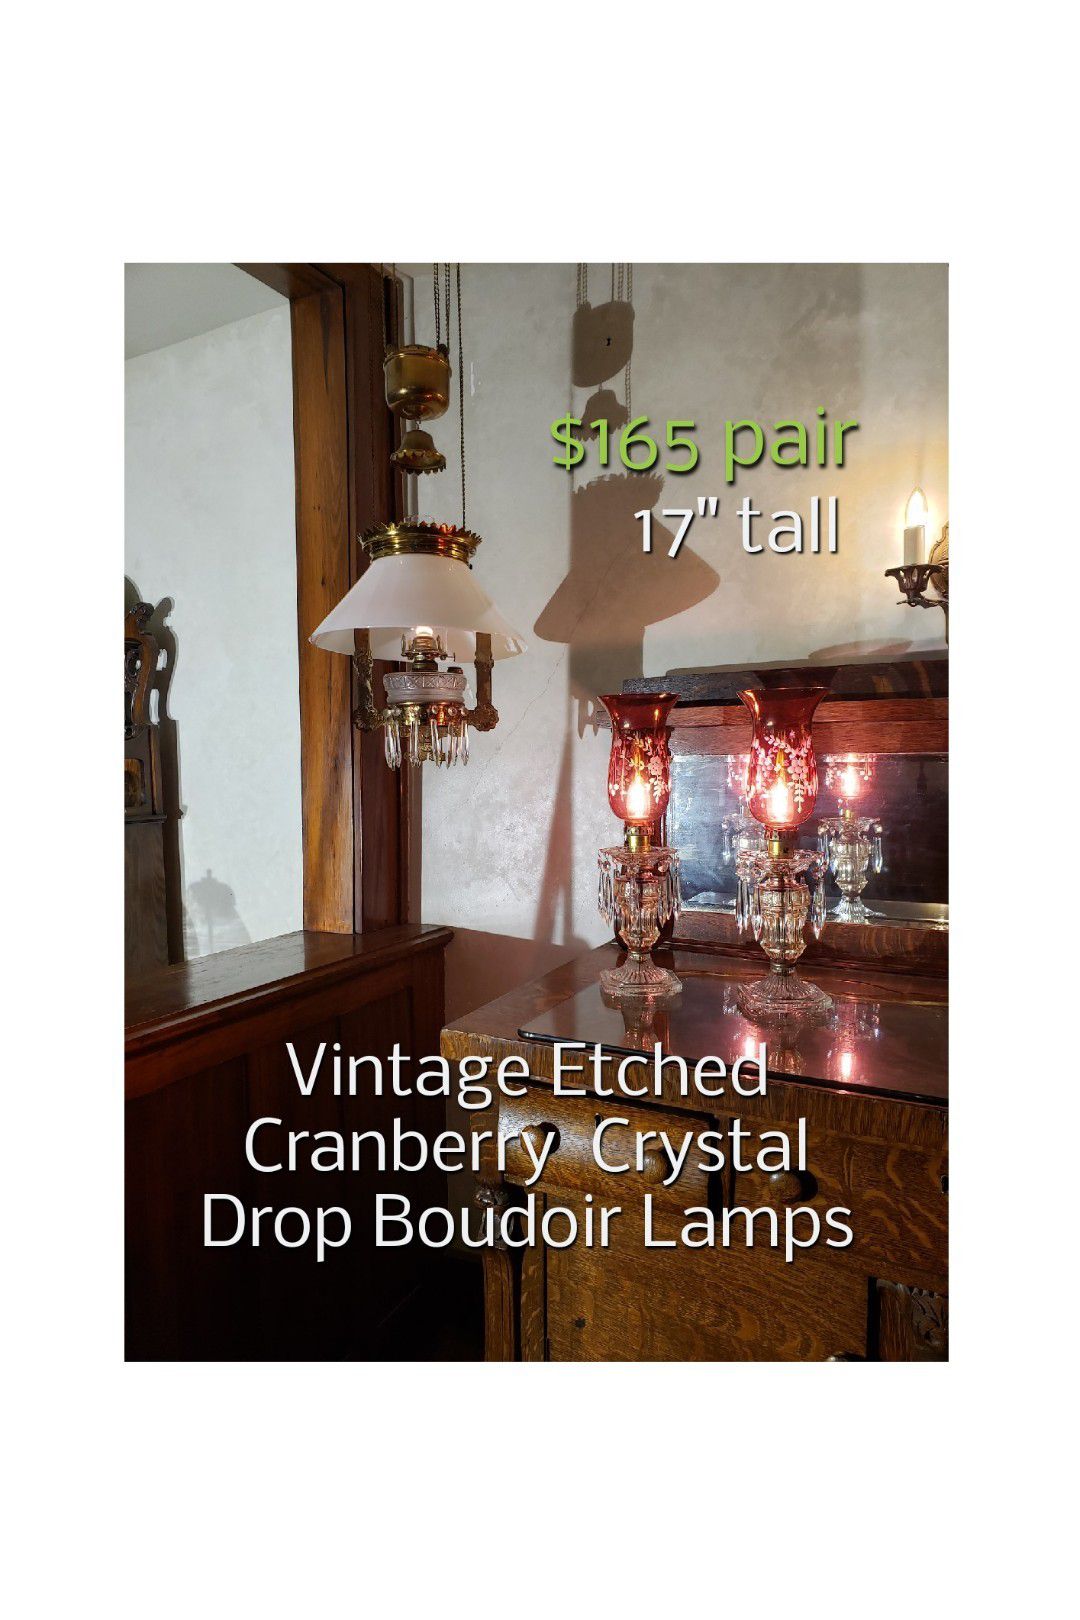 Vintage Etched Lamps $165